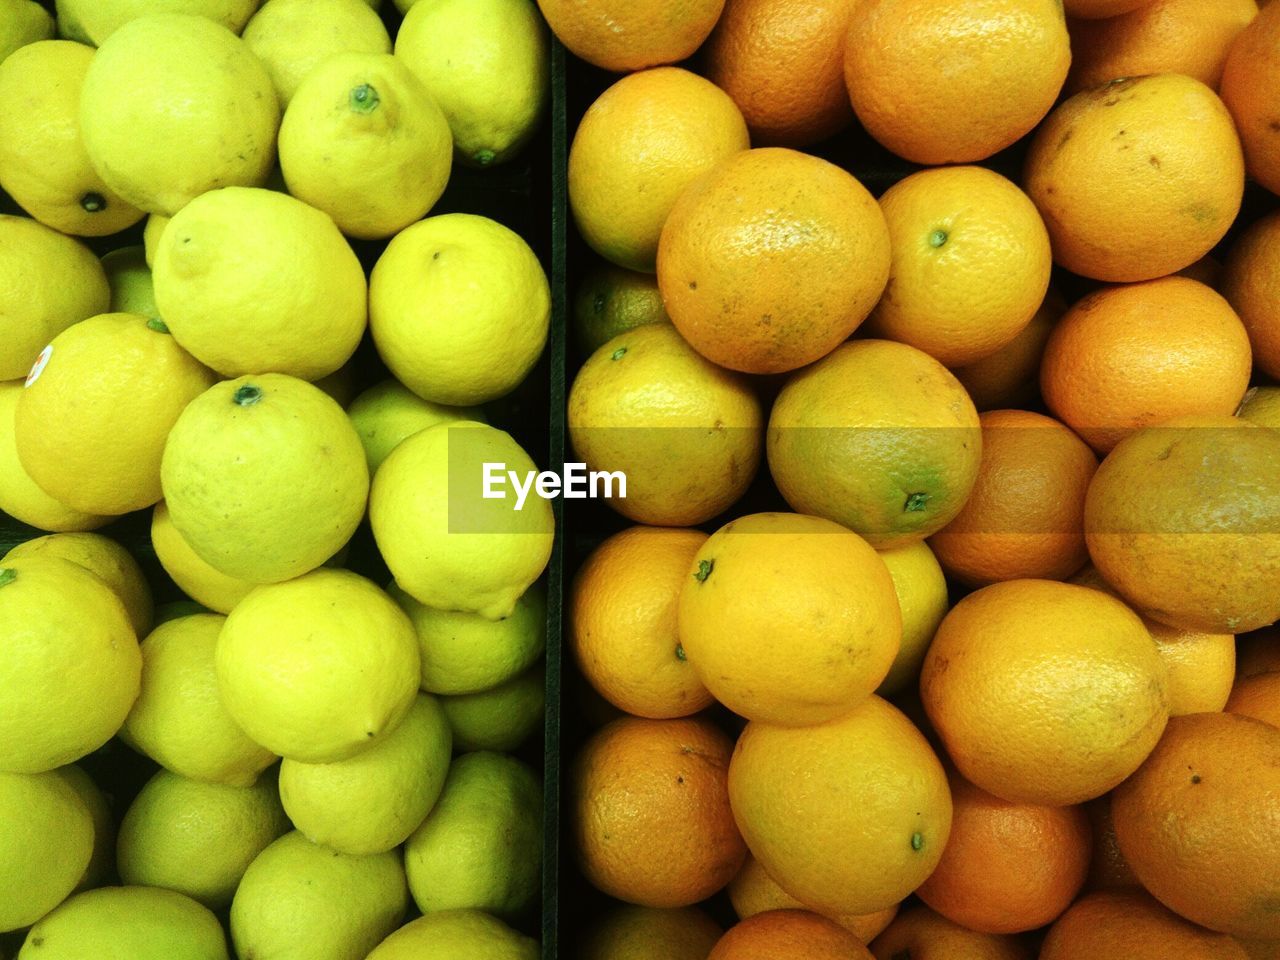 Full frame shot of oranges and lemons for sale at market stall